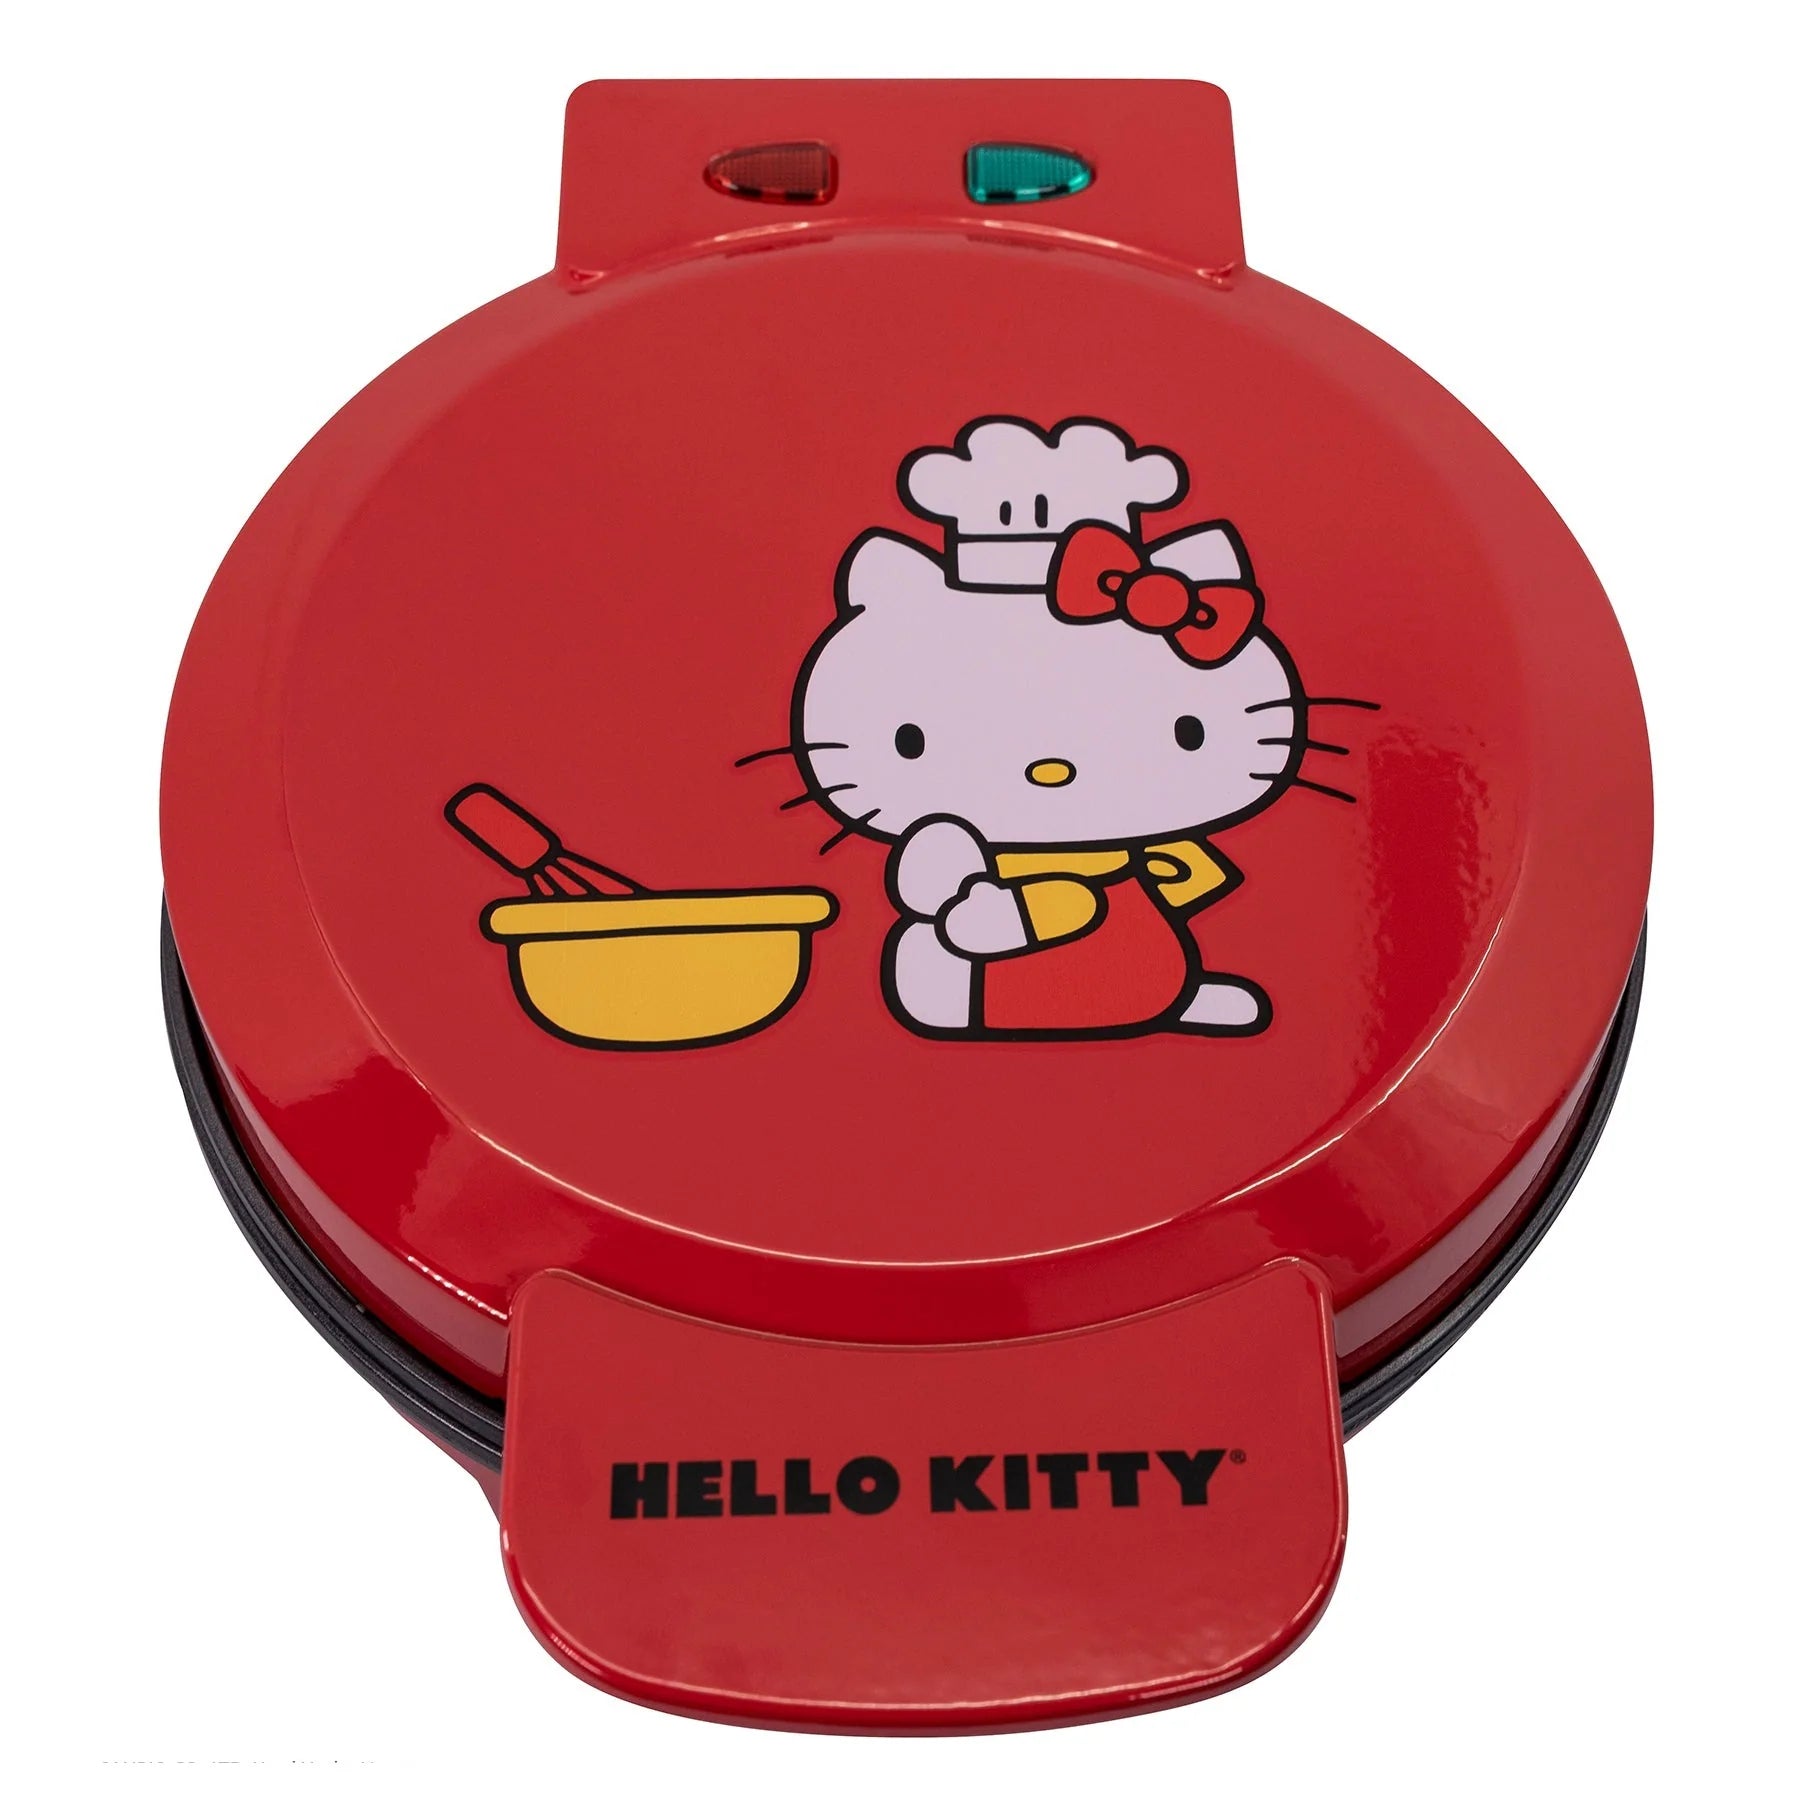 Hello Kitty Round Waffle Maker